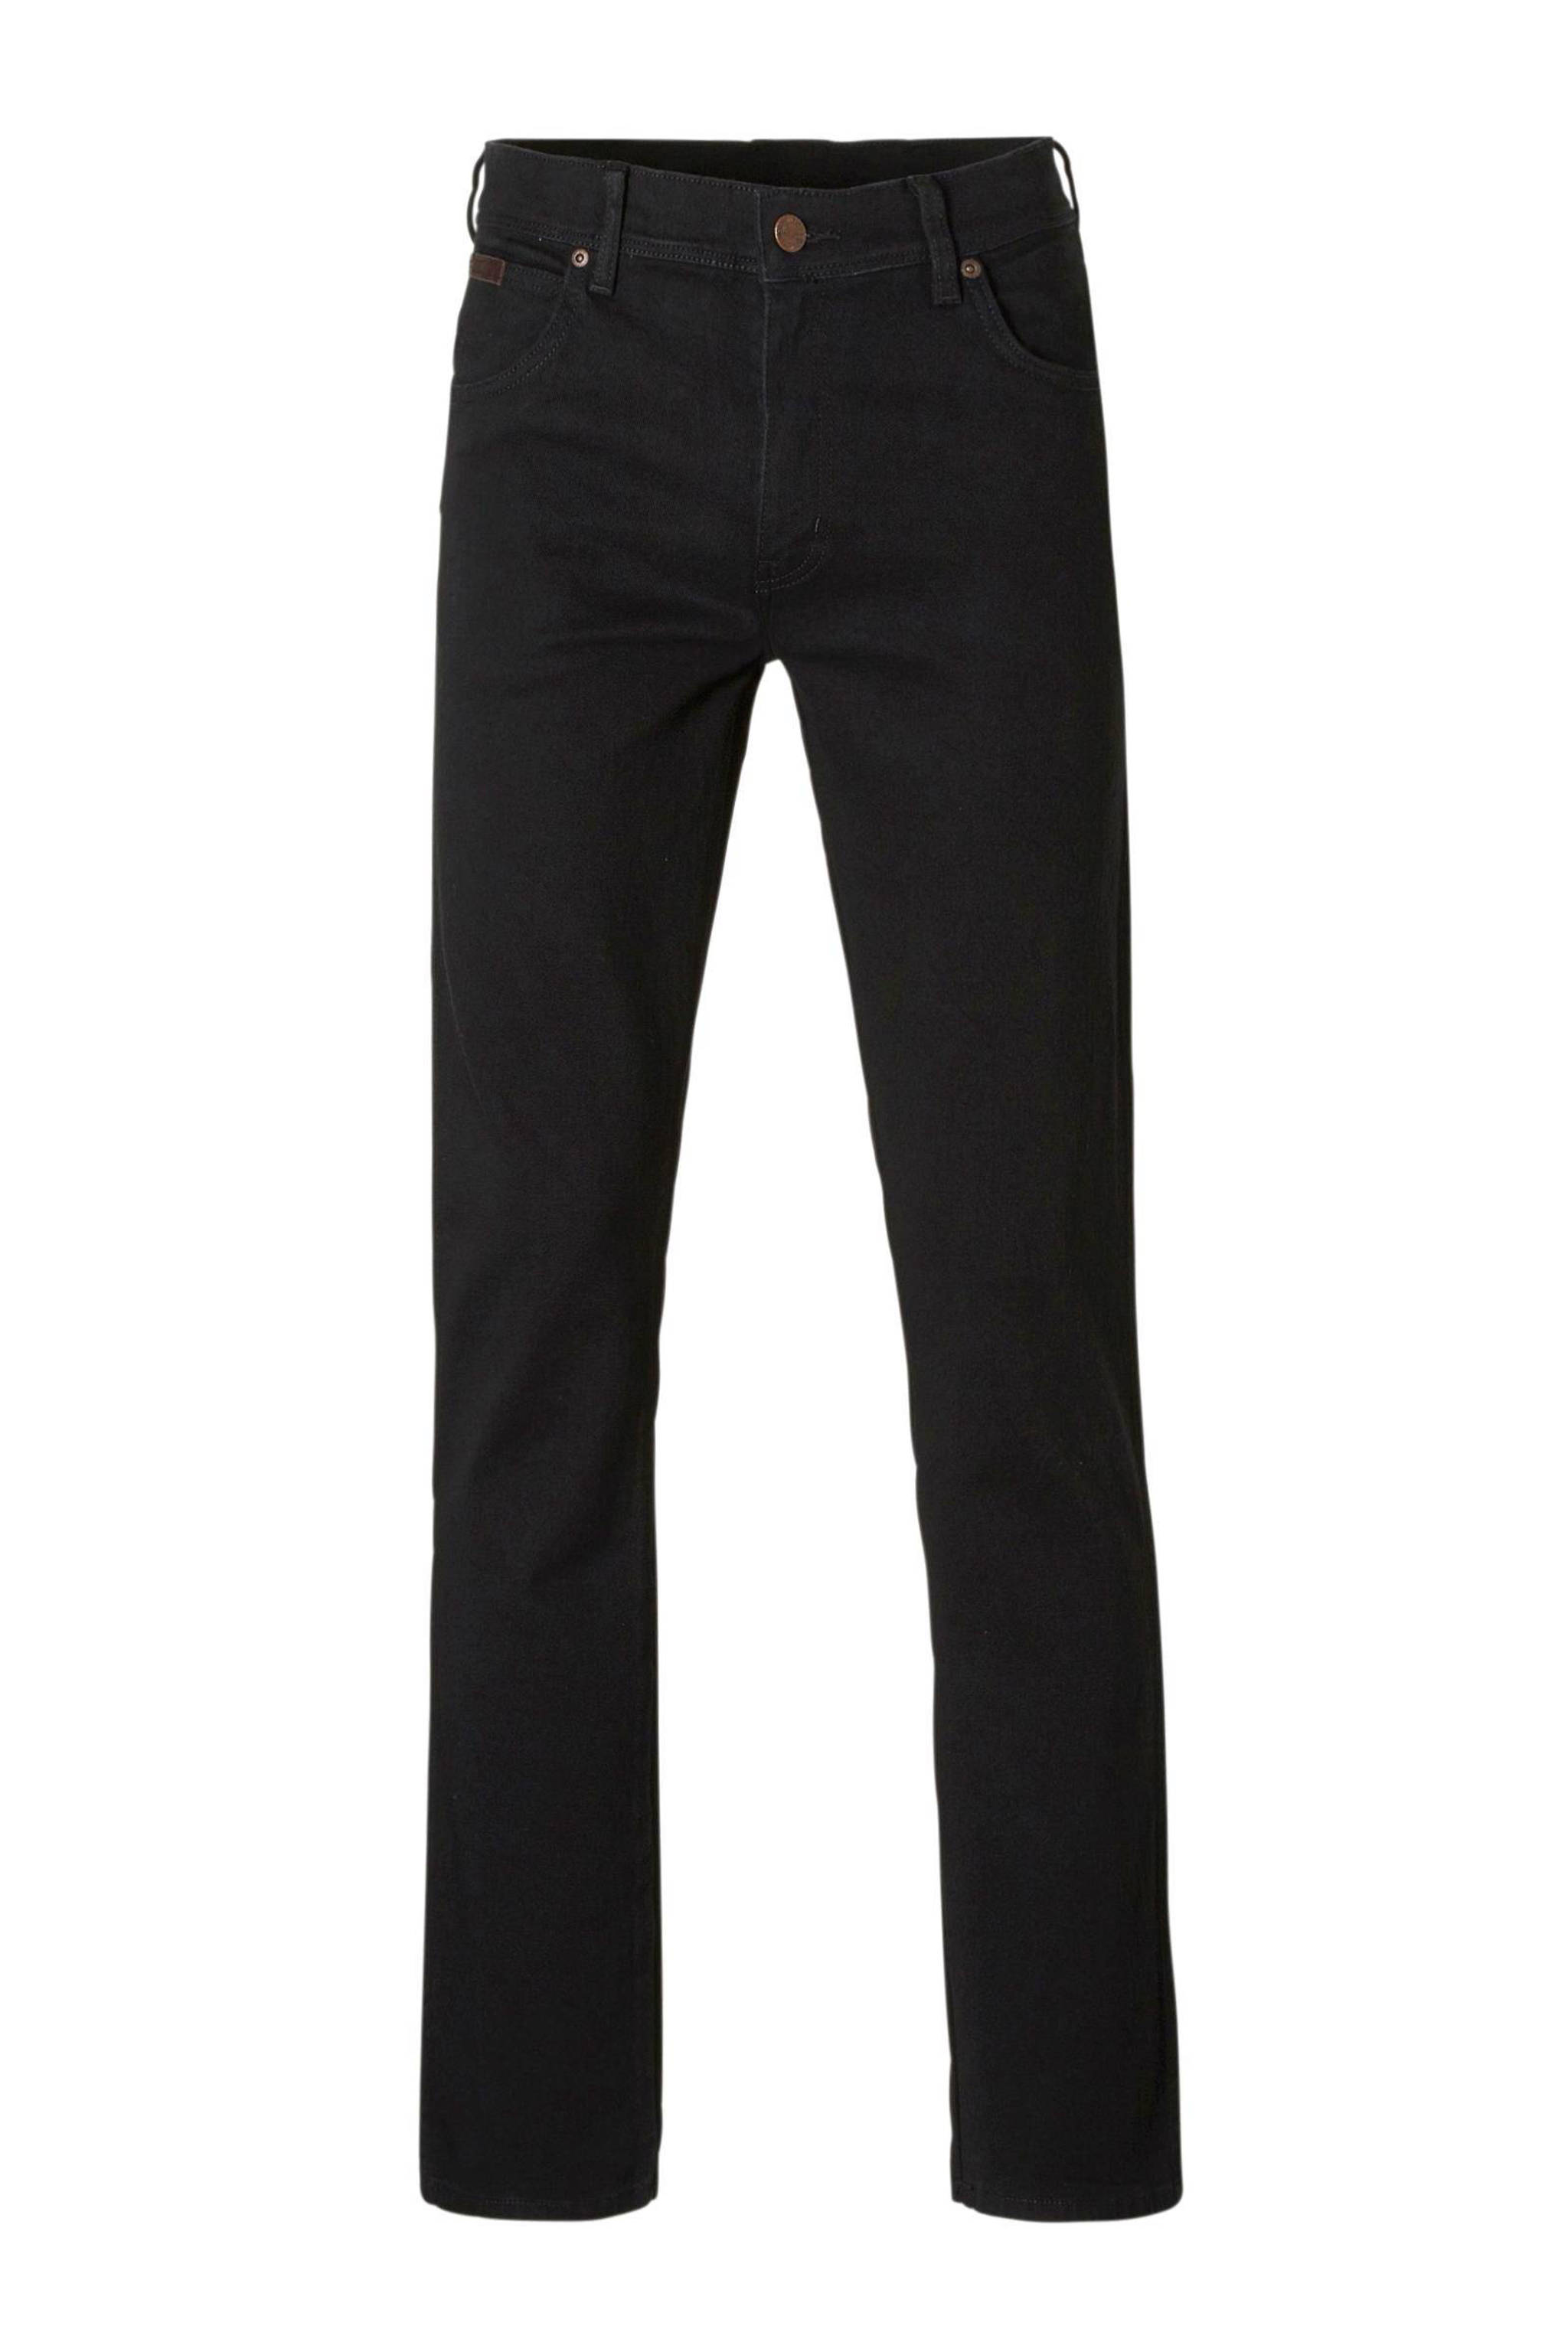 Oogverblindend extract passage Wrangler regular fit jeans Texas black overdye | wehkamp